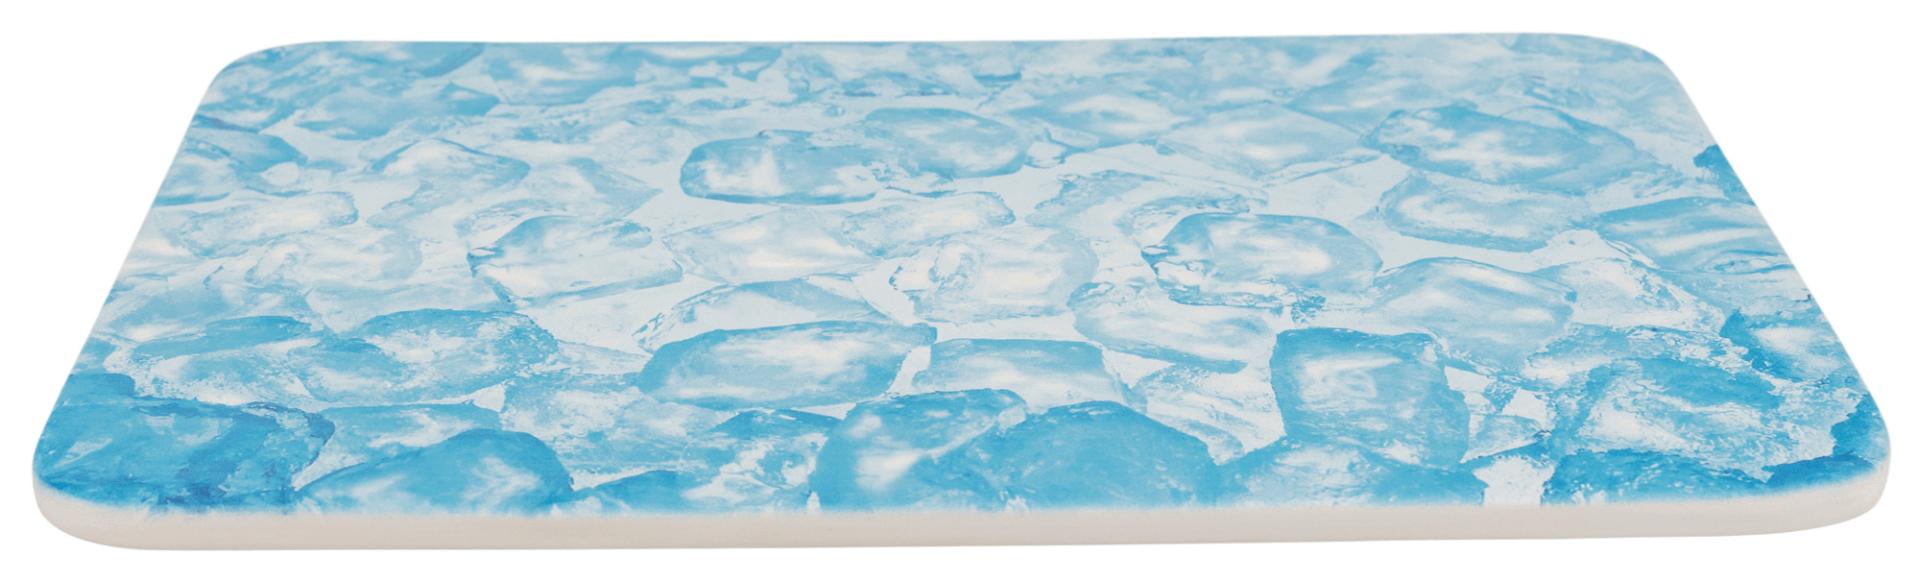 TRIXIE Kühlplatte, Meerschweinchen, Keramik, 28 x 20 cm, blau